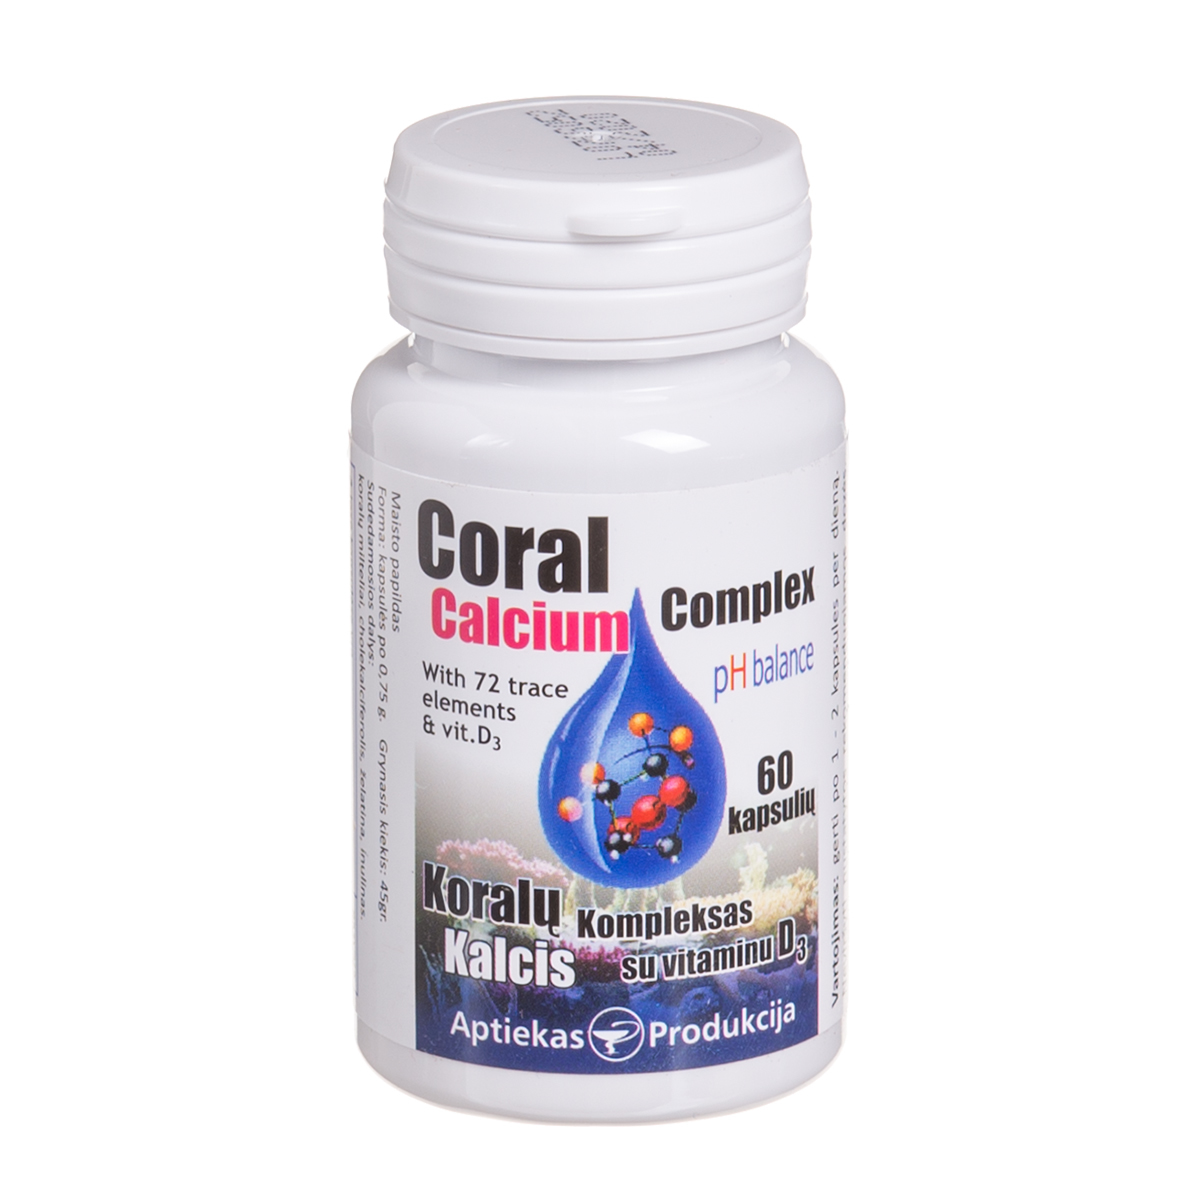 CORAL CALCIUM COMPLEX SU VITAMINU D3, 500 mg, 60 kapsulių